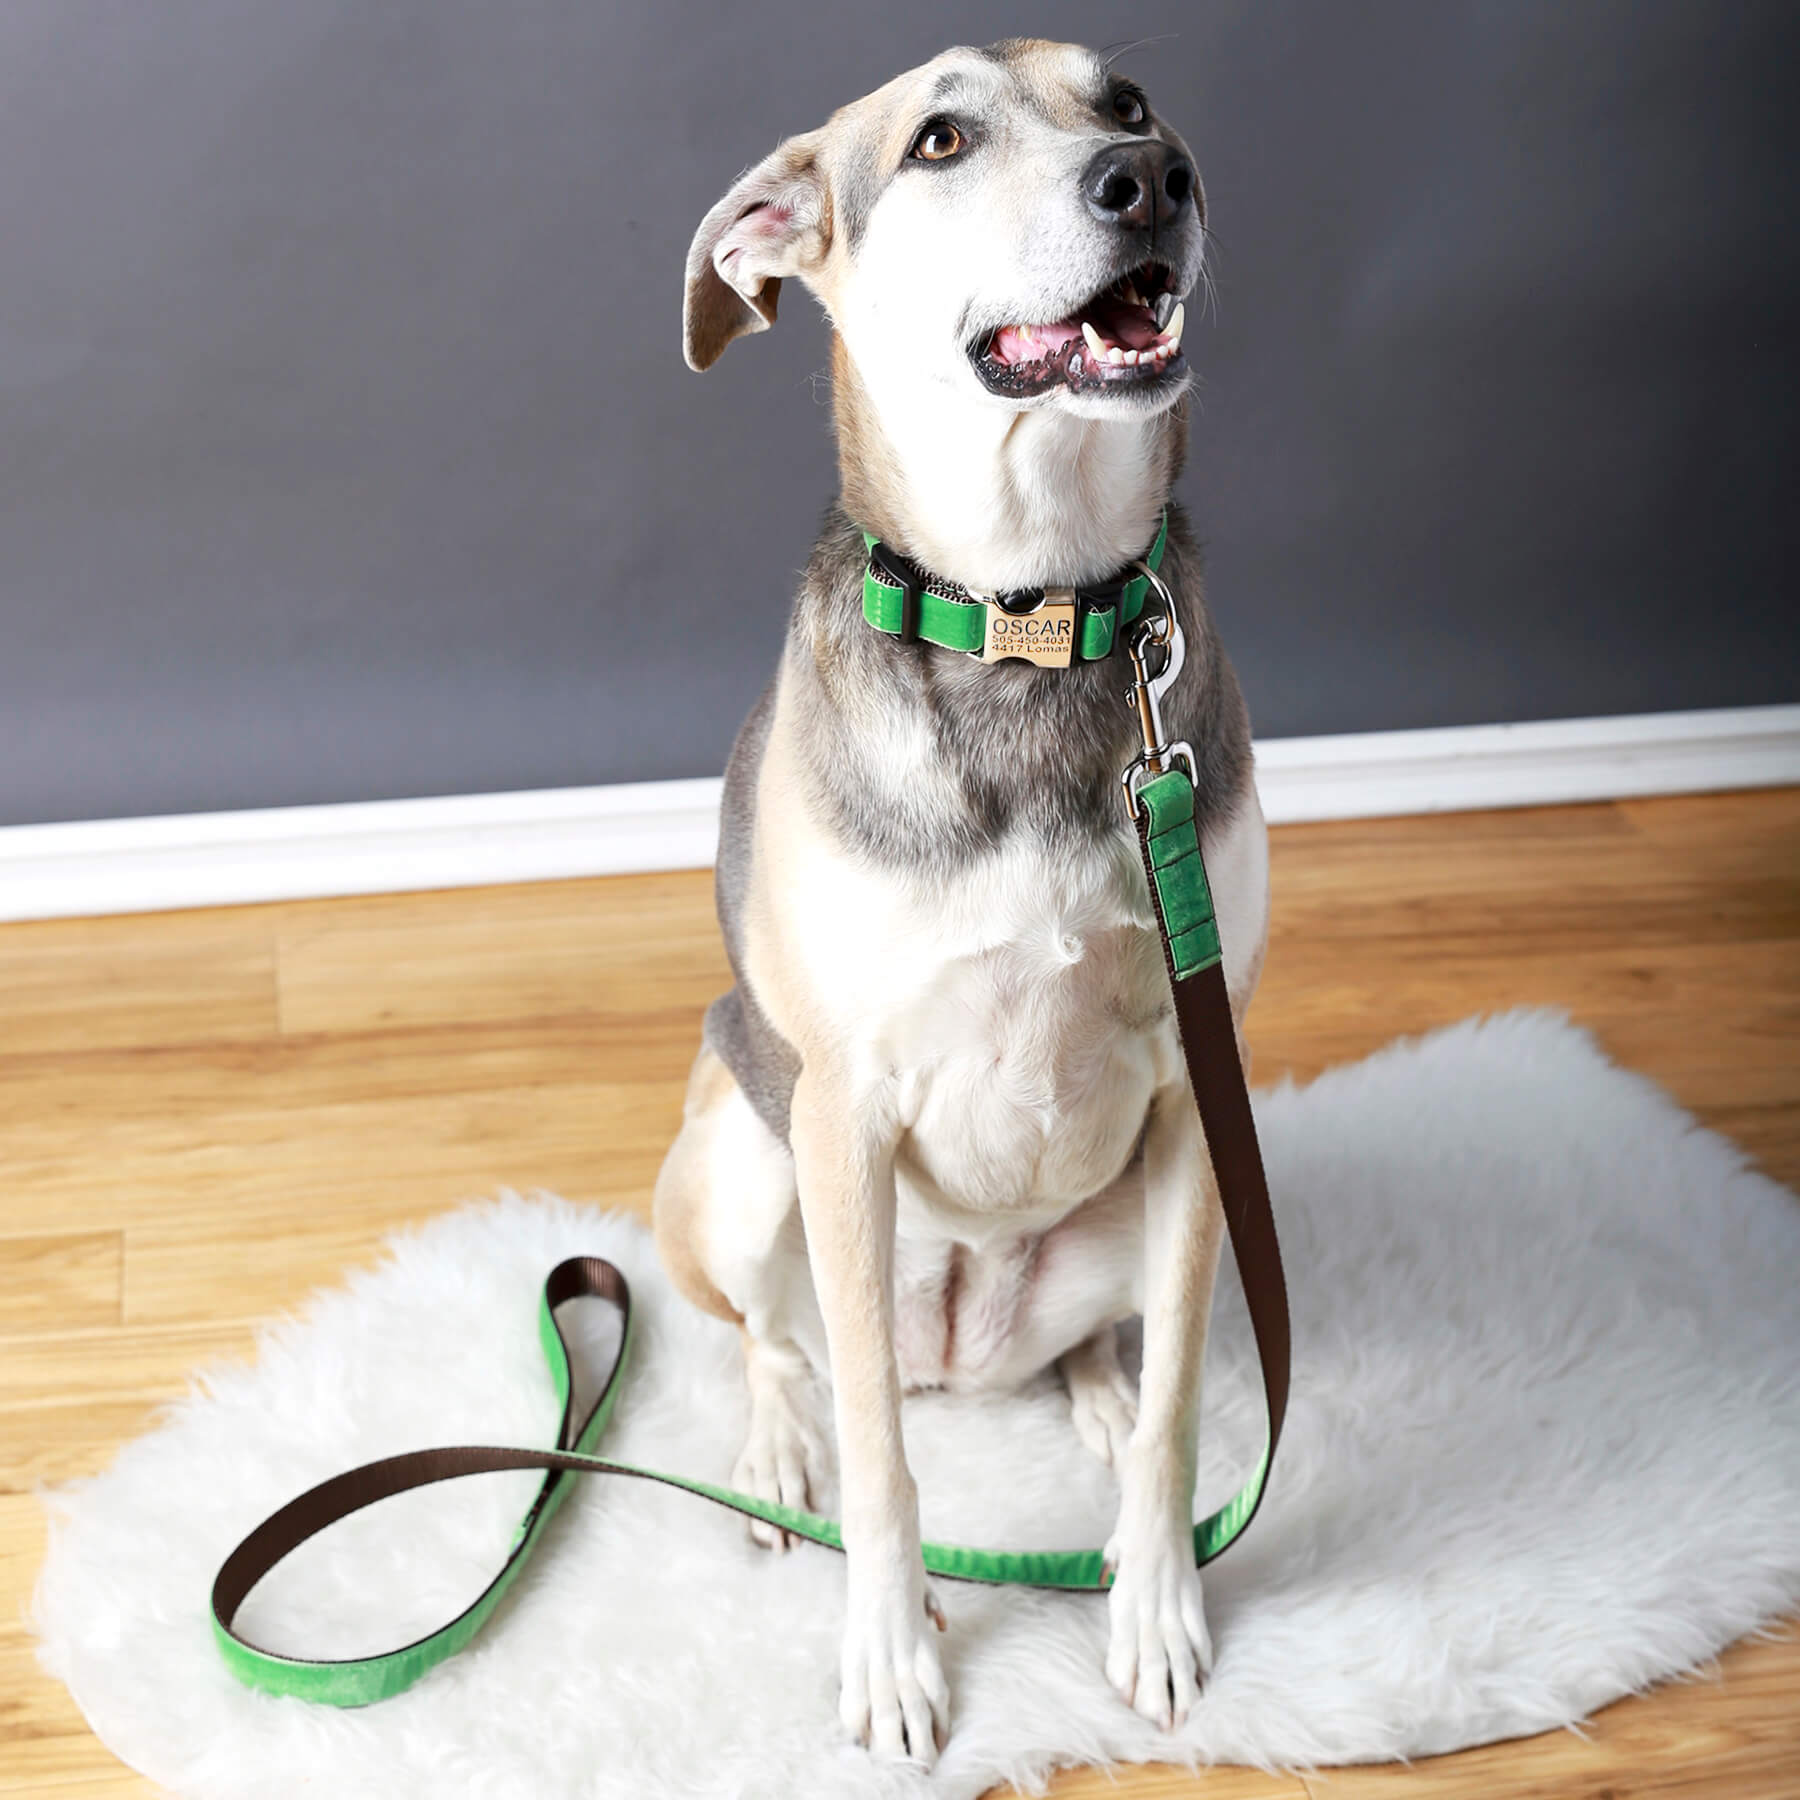 Oscar' Green Embroidered Dog Collar